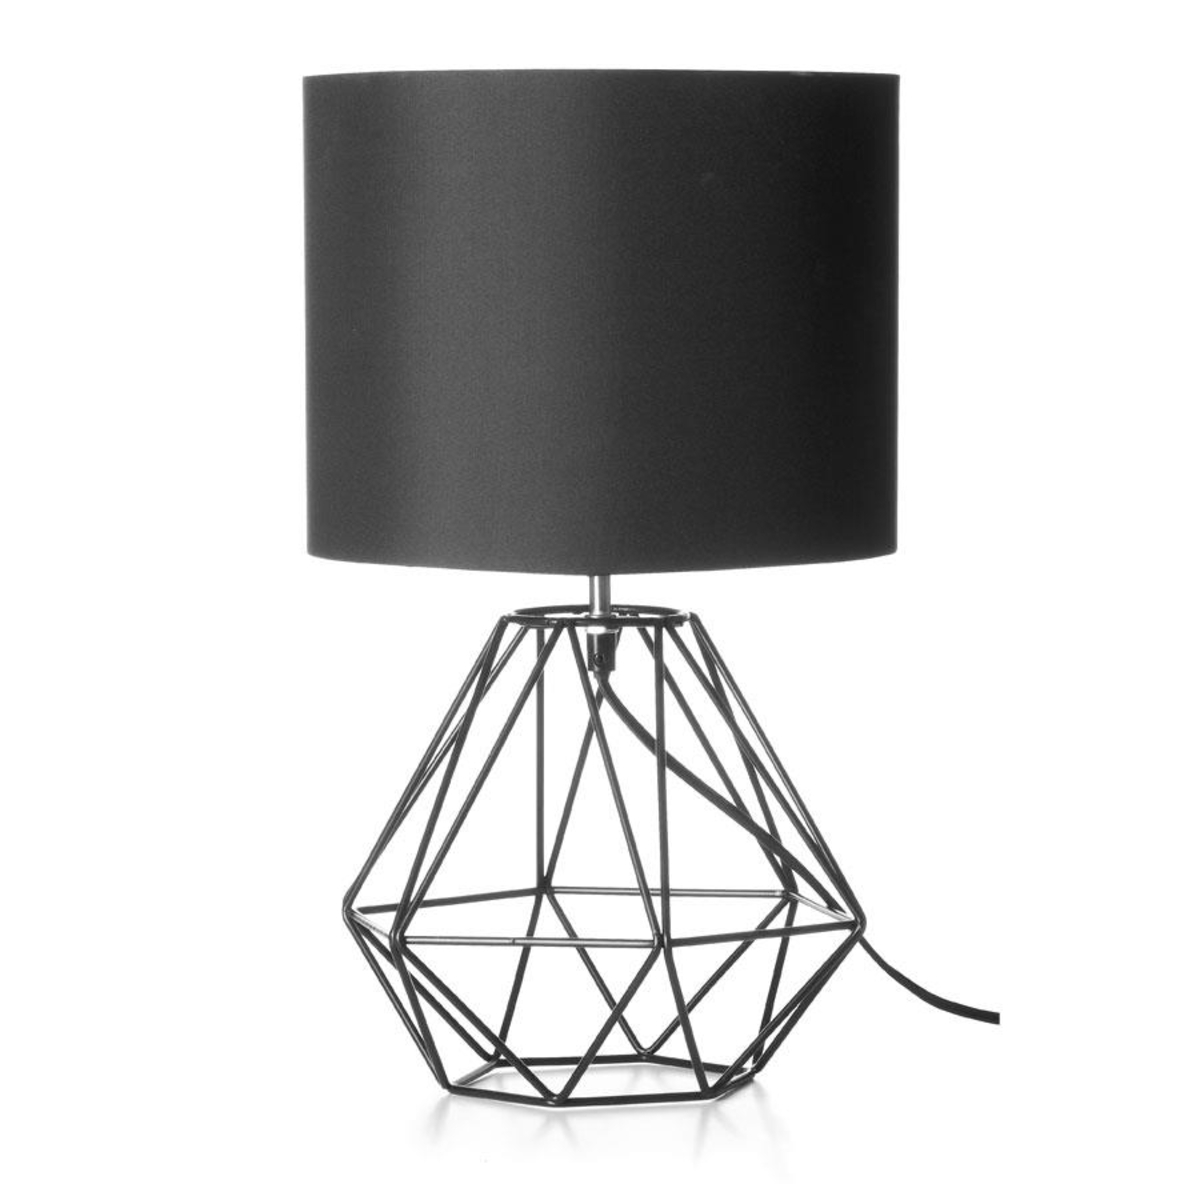 Elegant Black Bedside Lamp 50 Most Wonderful Table Base regarding sizing 1200 X 1200